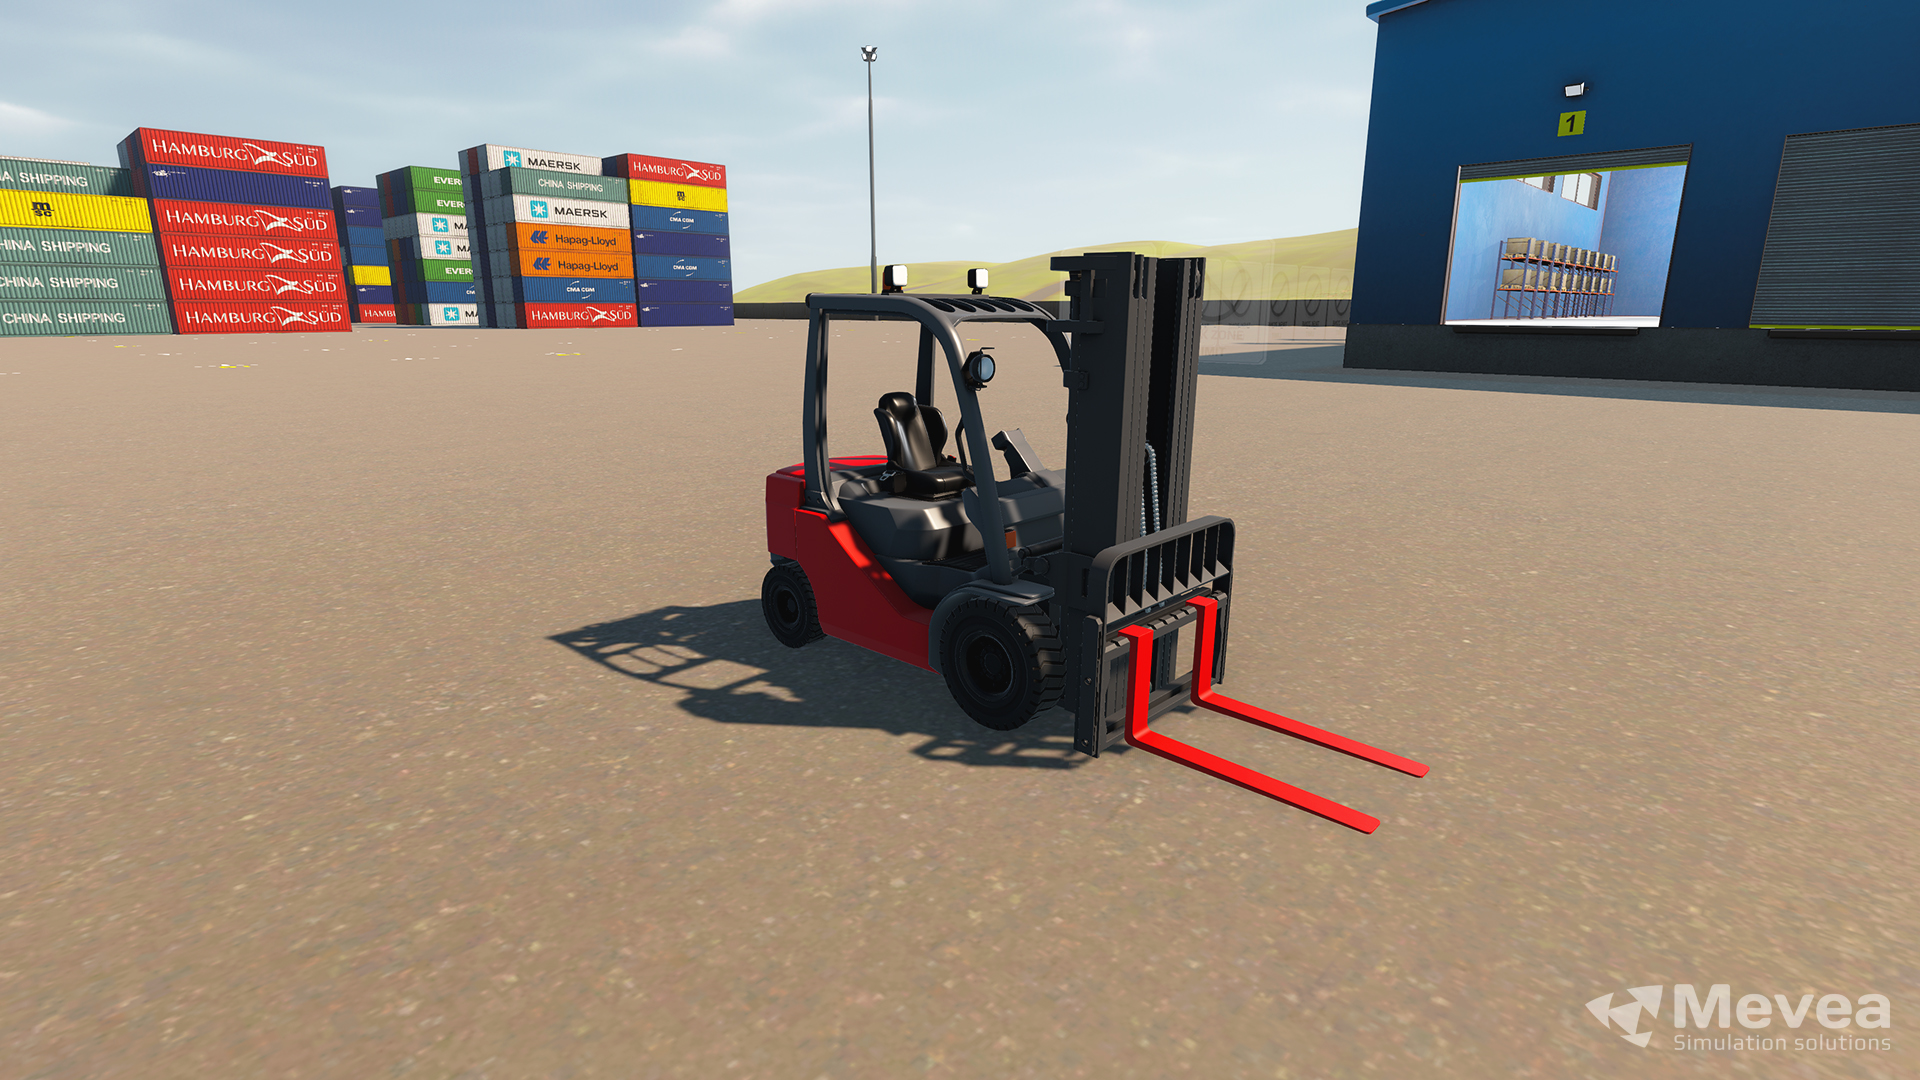 Forklift Simulator| Mevea Digital Twin Technology